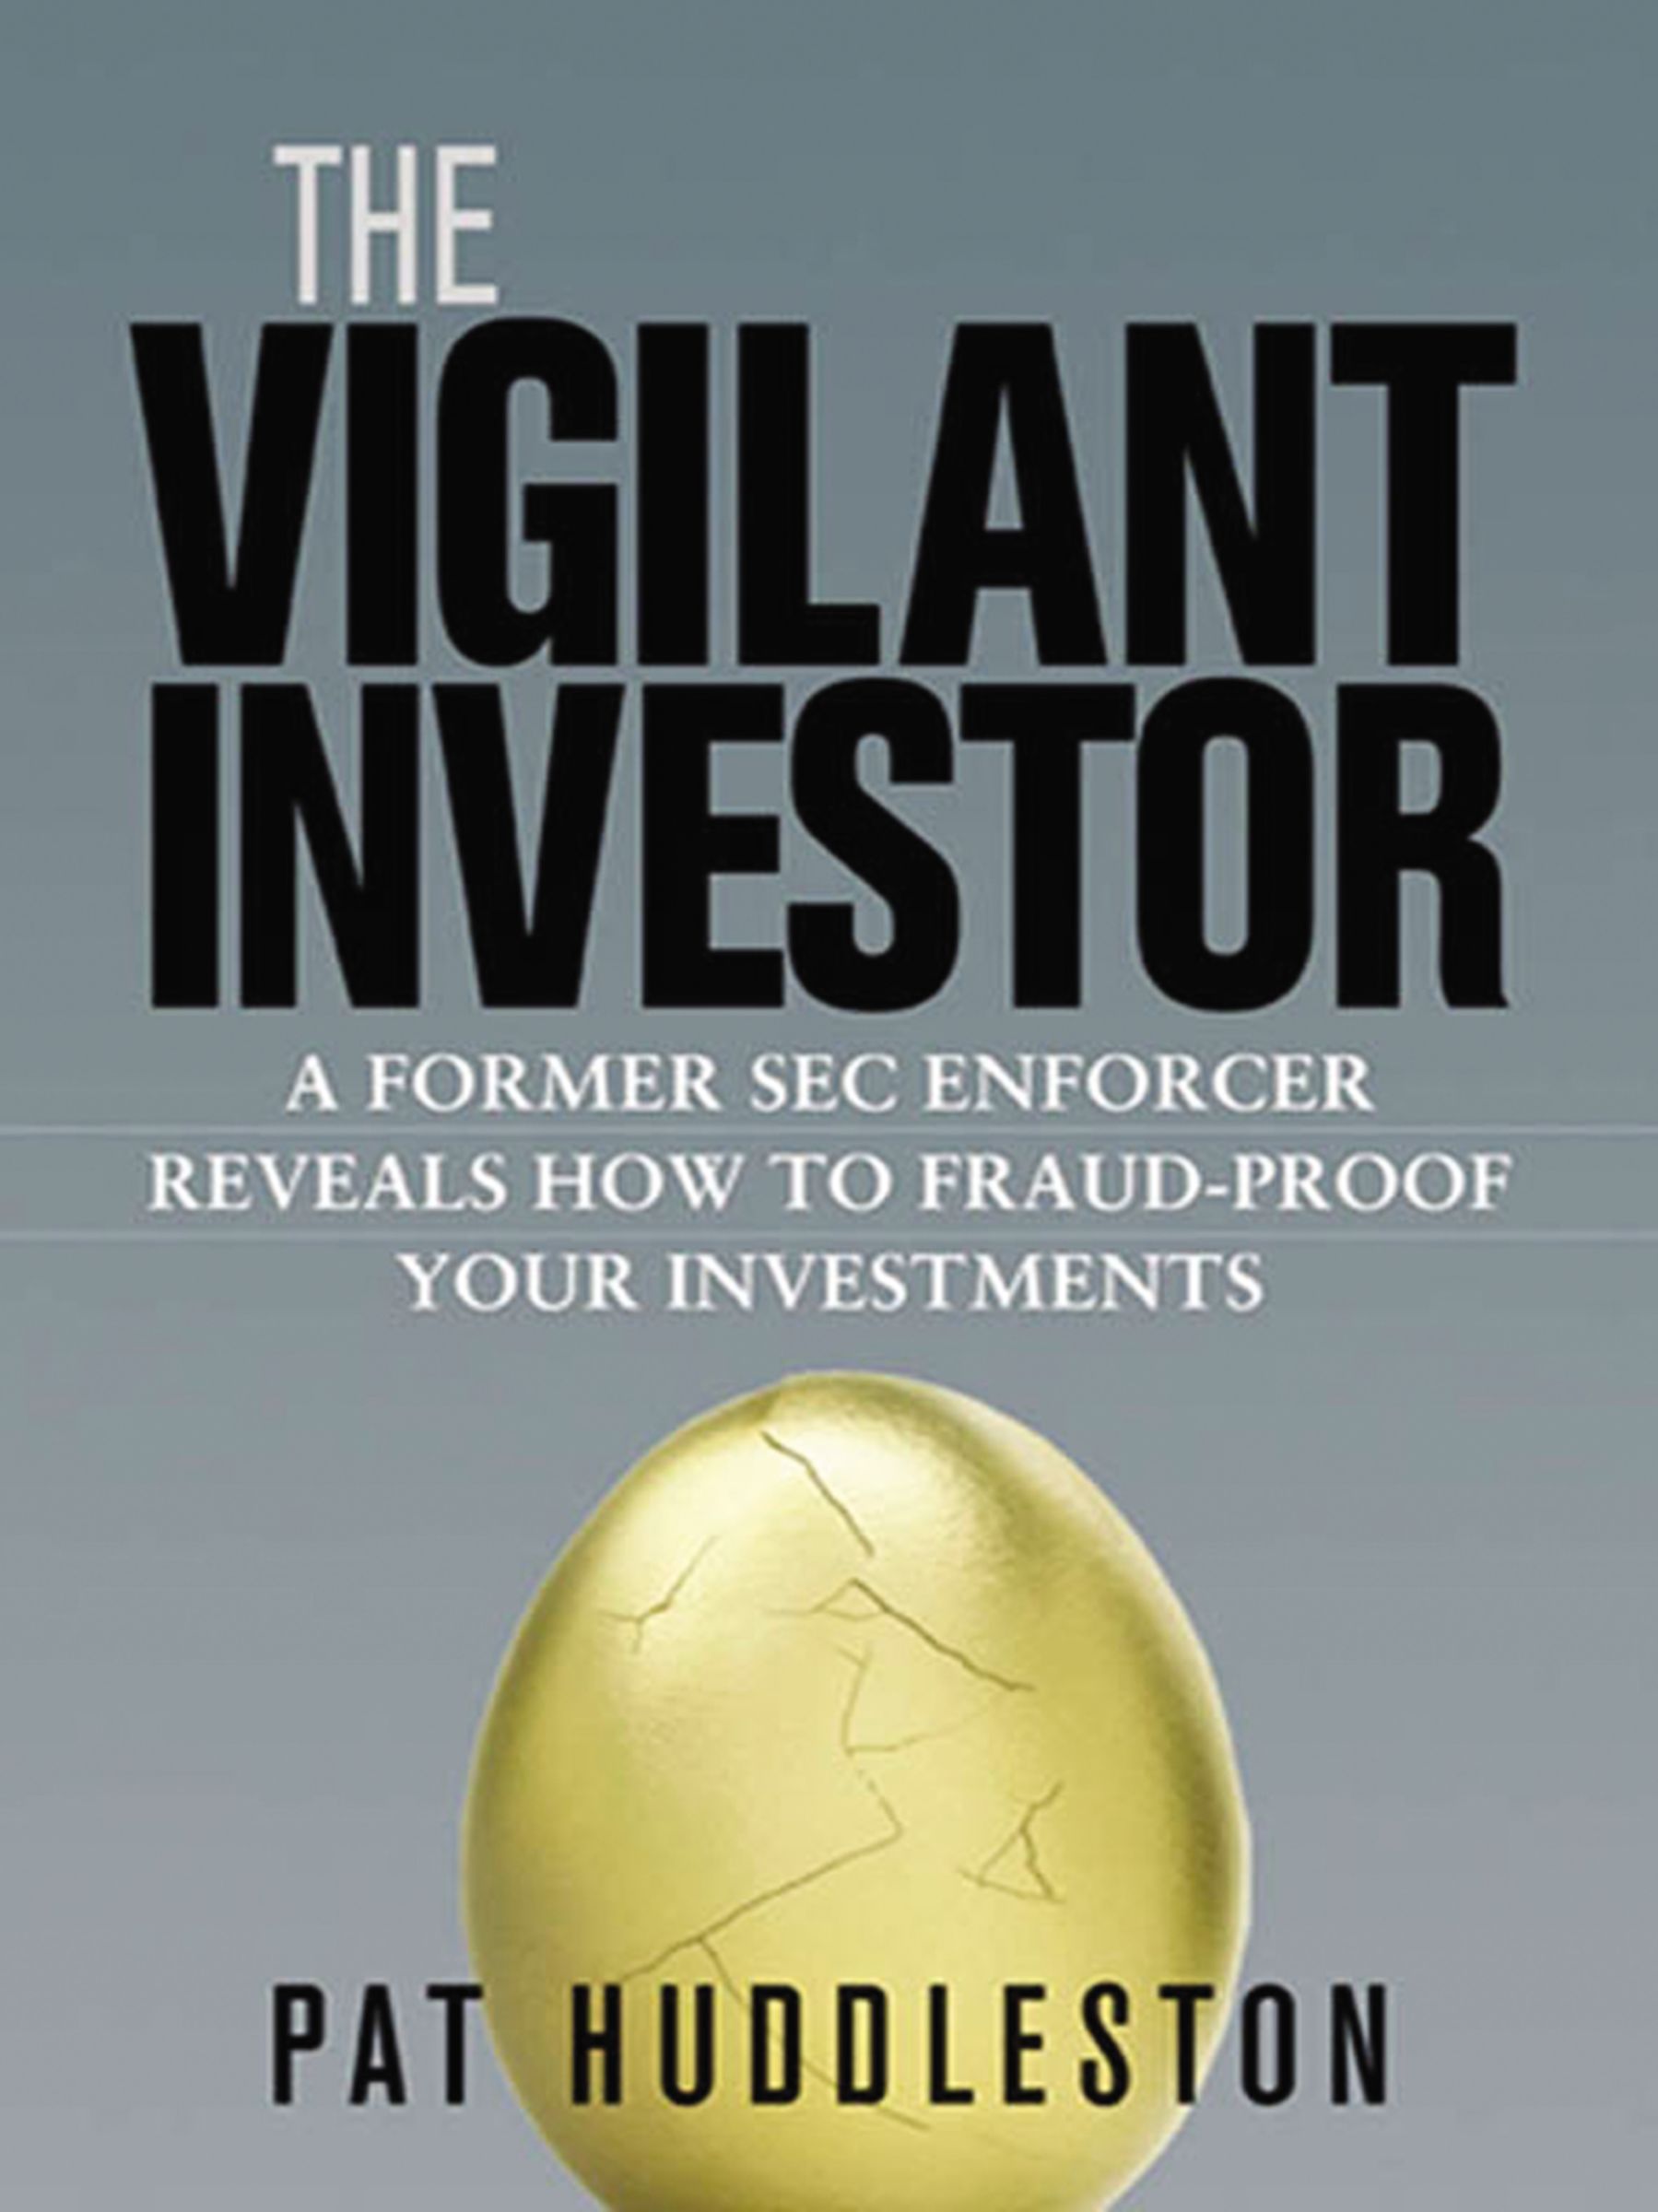 The Vigilant Investor